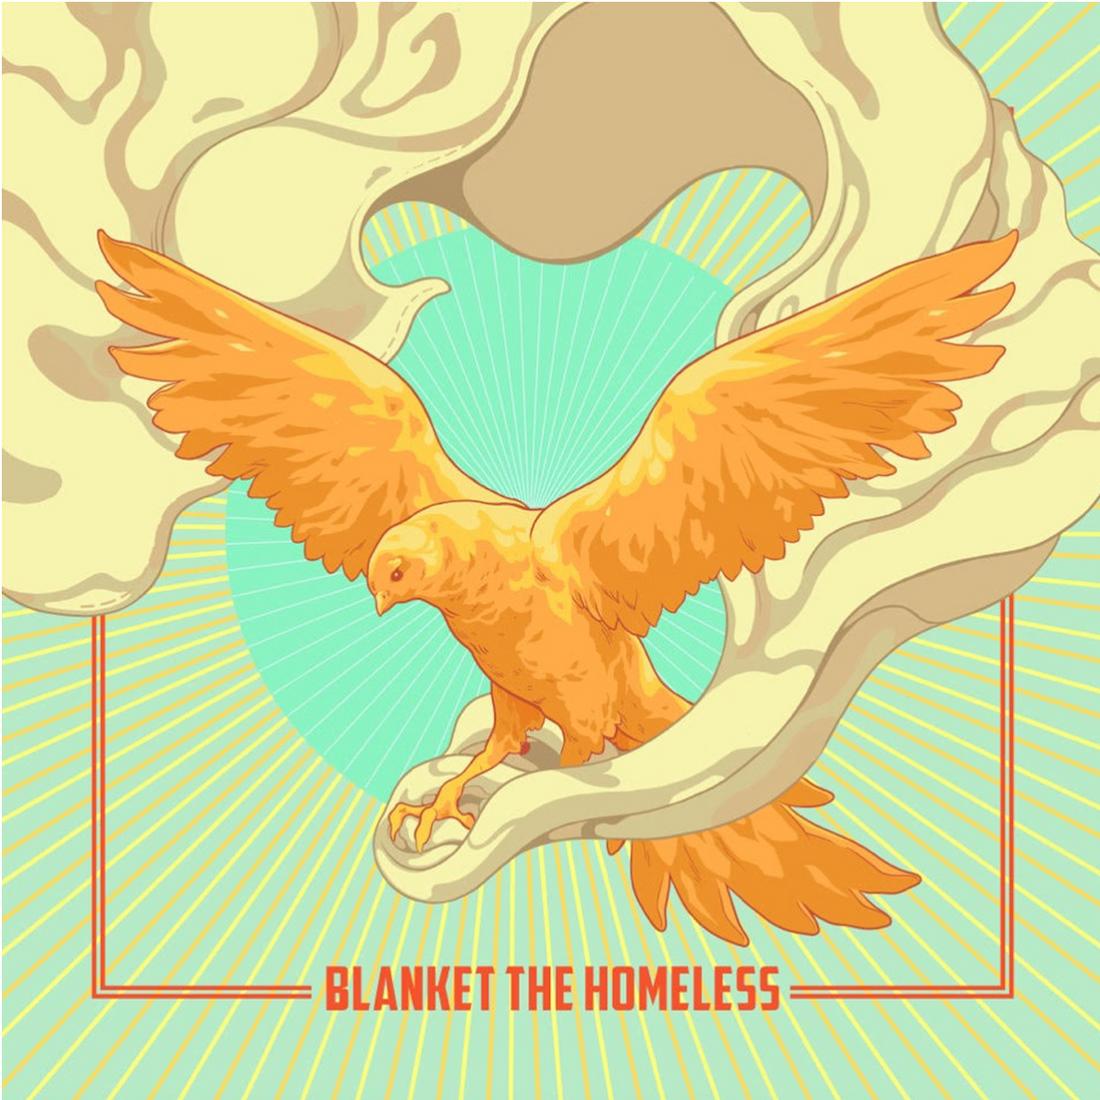 San Francisco Musicians Unite Benefit Album for Blanket the Homeless